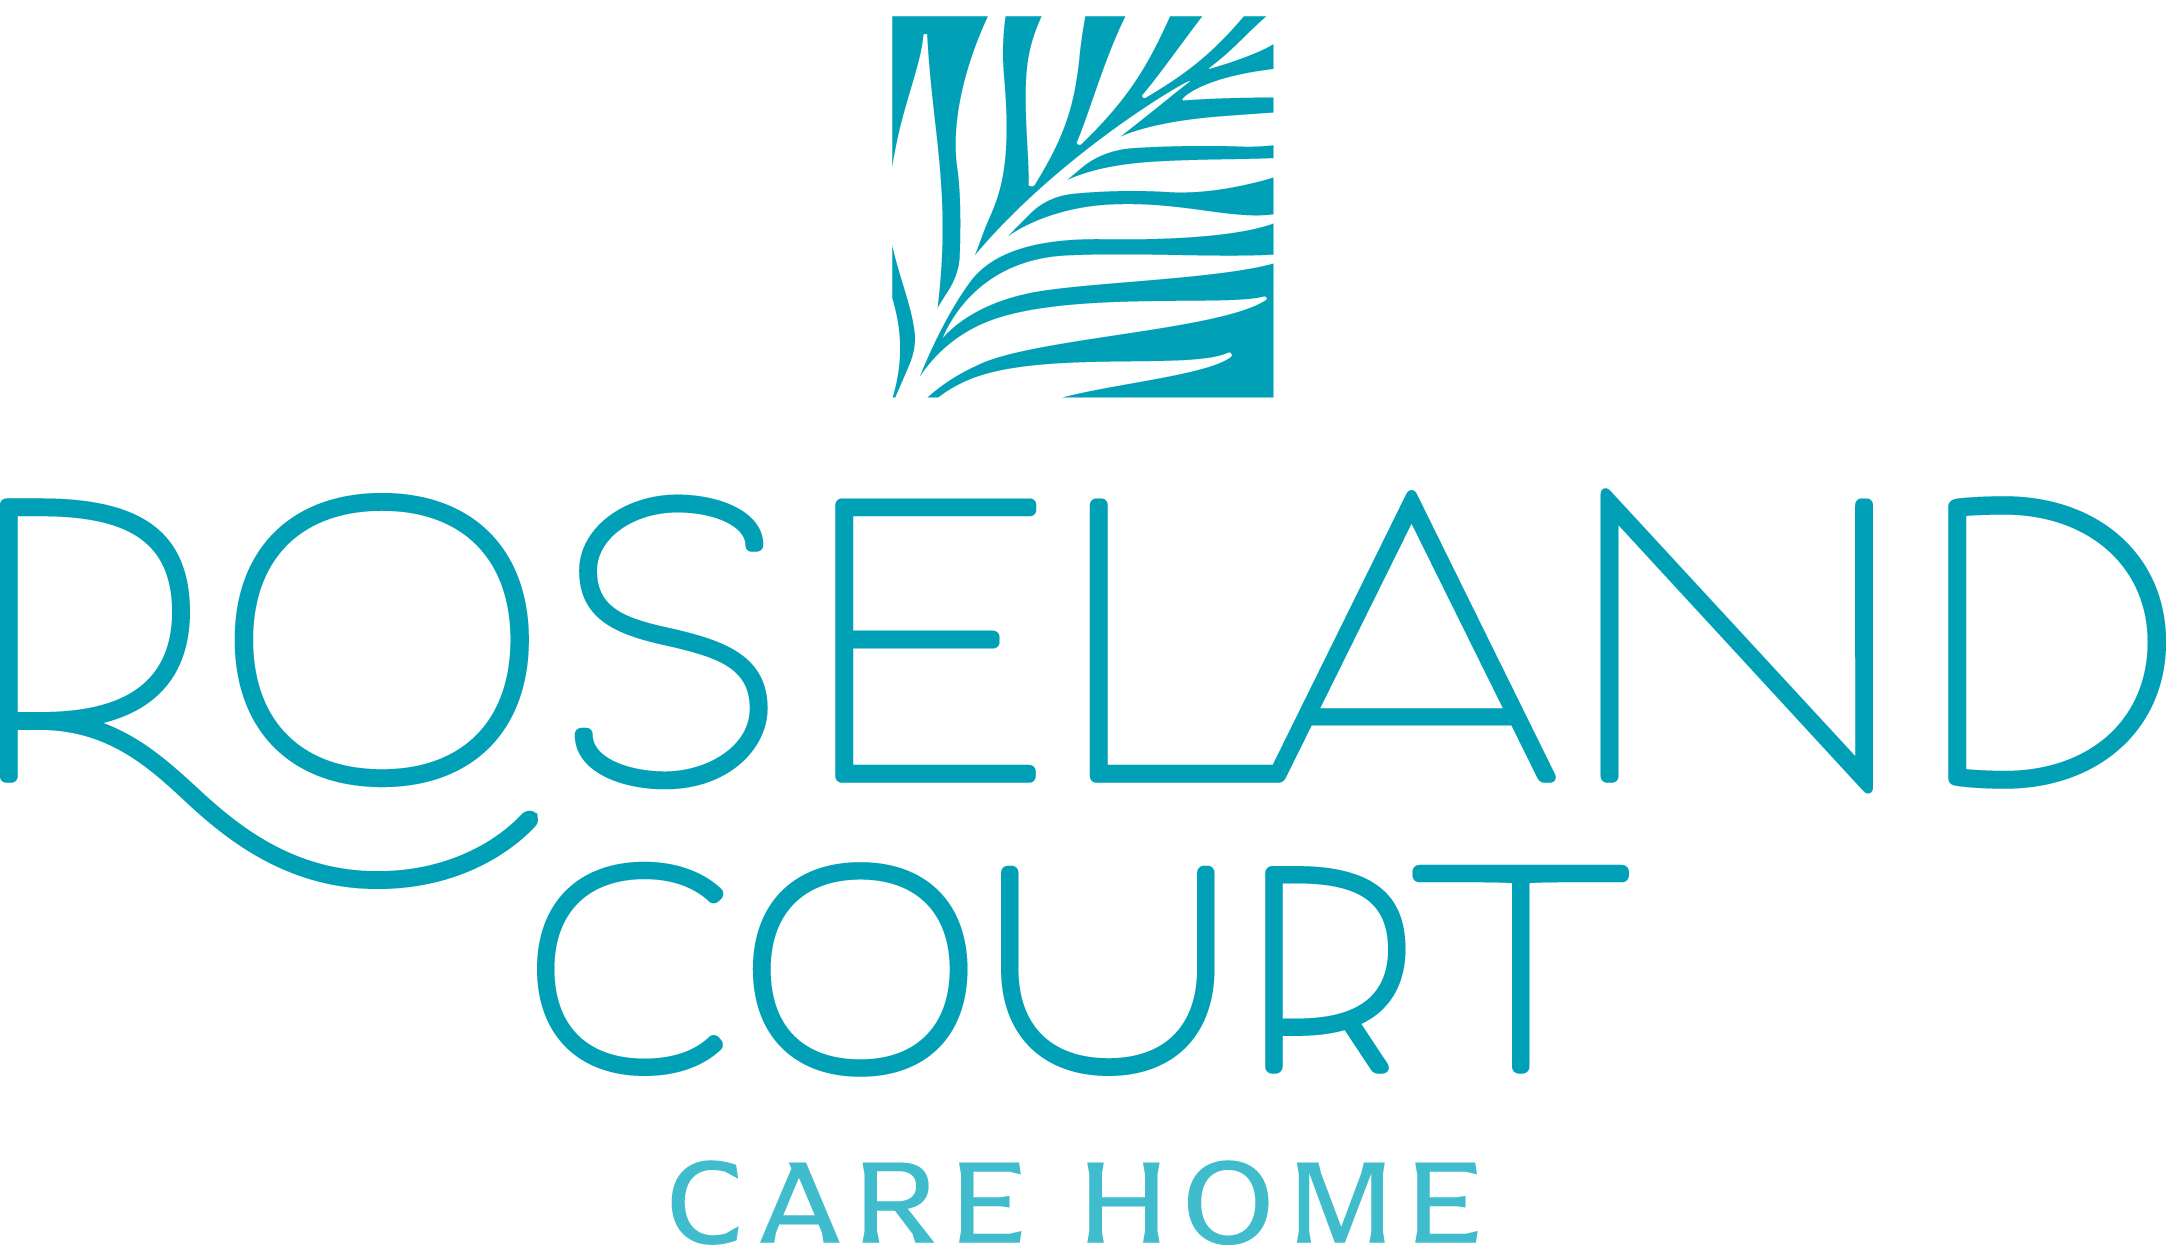 Roseland Court Care Home - Care Home